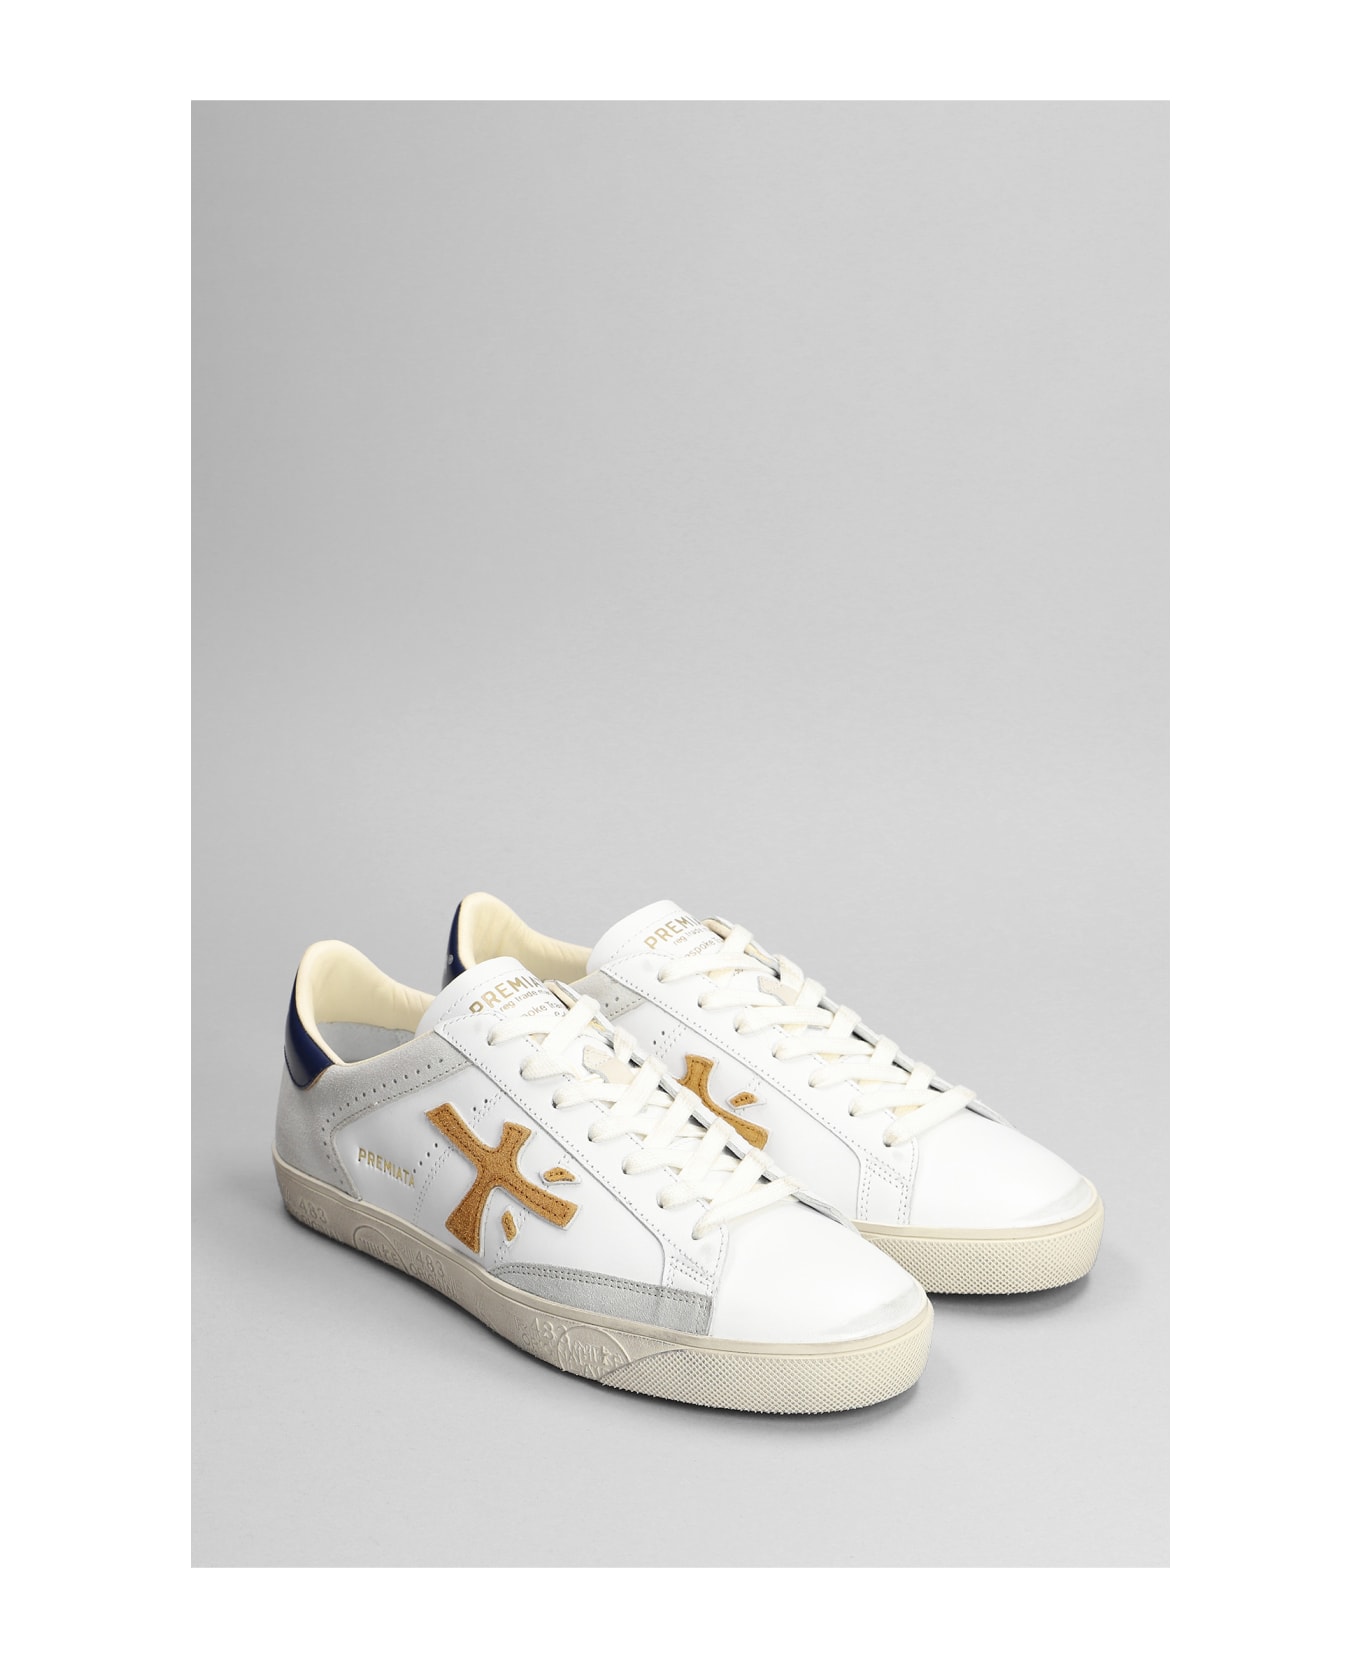 Premiata Steven Sneakers In White Suede And Leather - white